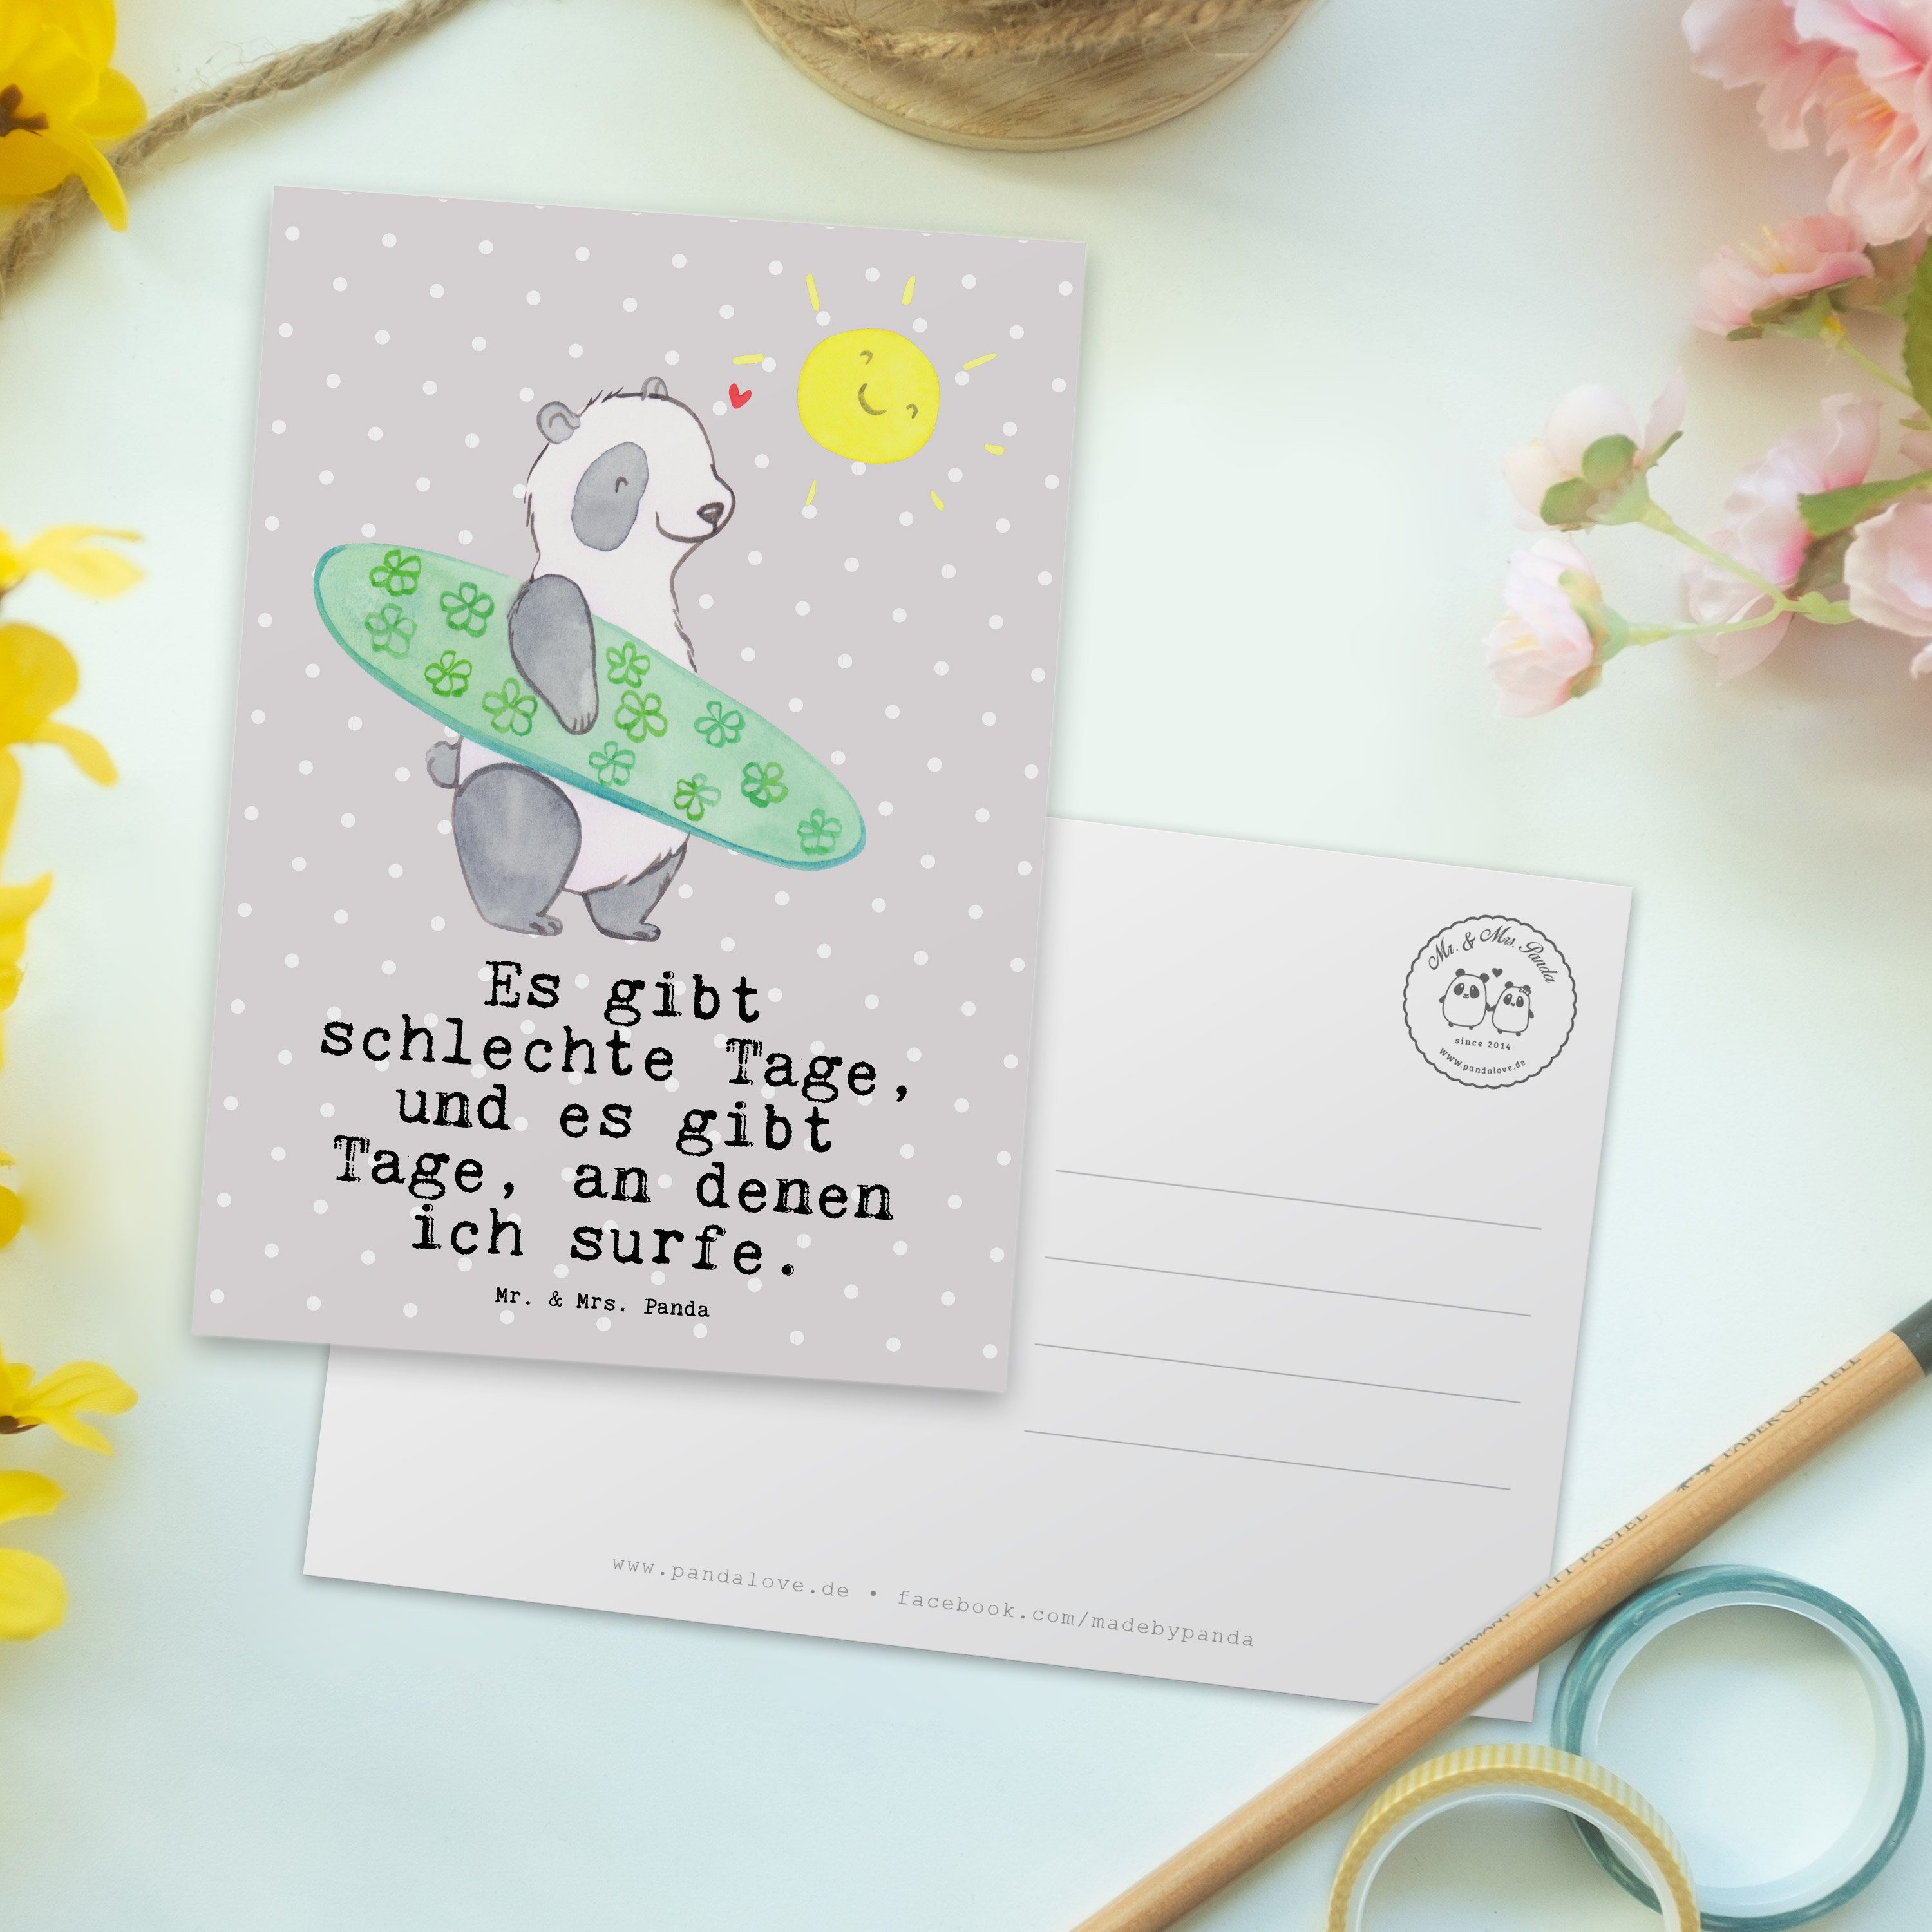 Panda Mr. Tage Grau Surfen & Karte, Geschenk, Postkarte Mrs. - Wellenreiten, - Panda Pastell Spo